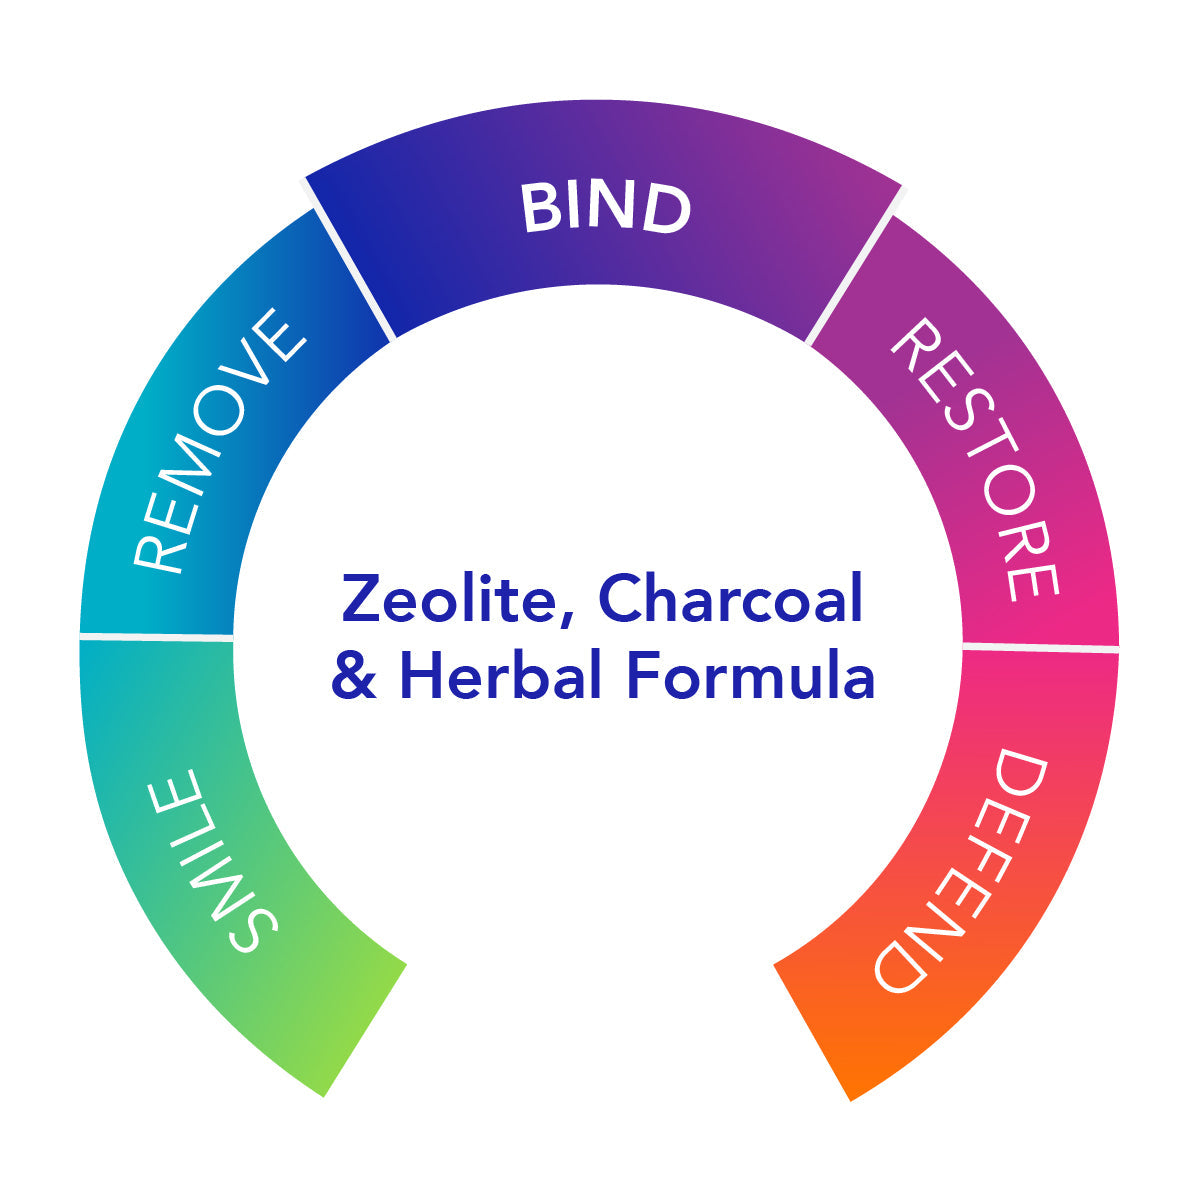 GI Detox®+ - Zeolite, Charcoal & Herbal Formula | Professional